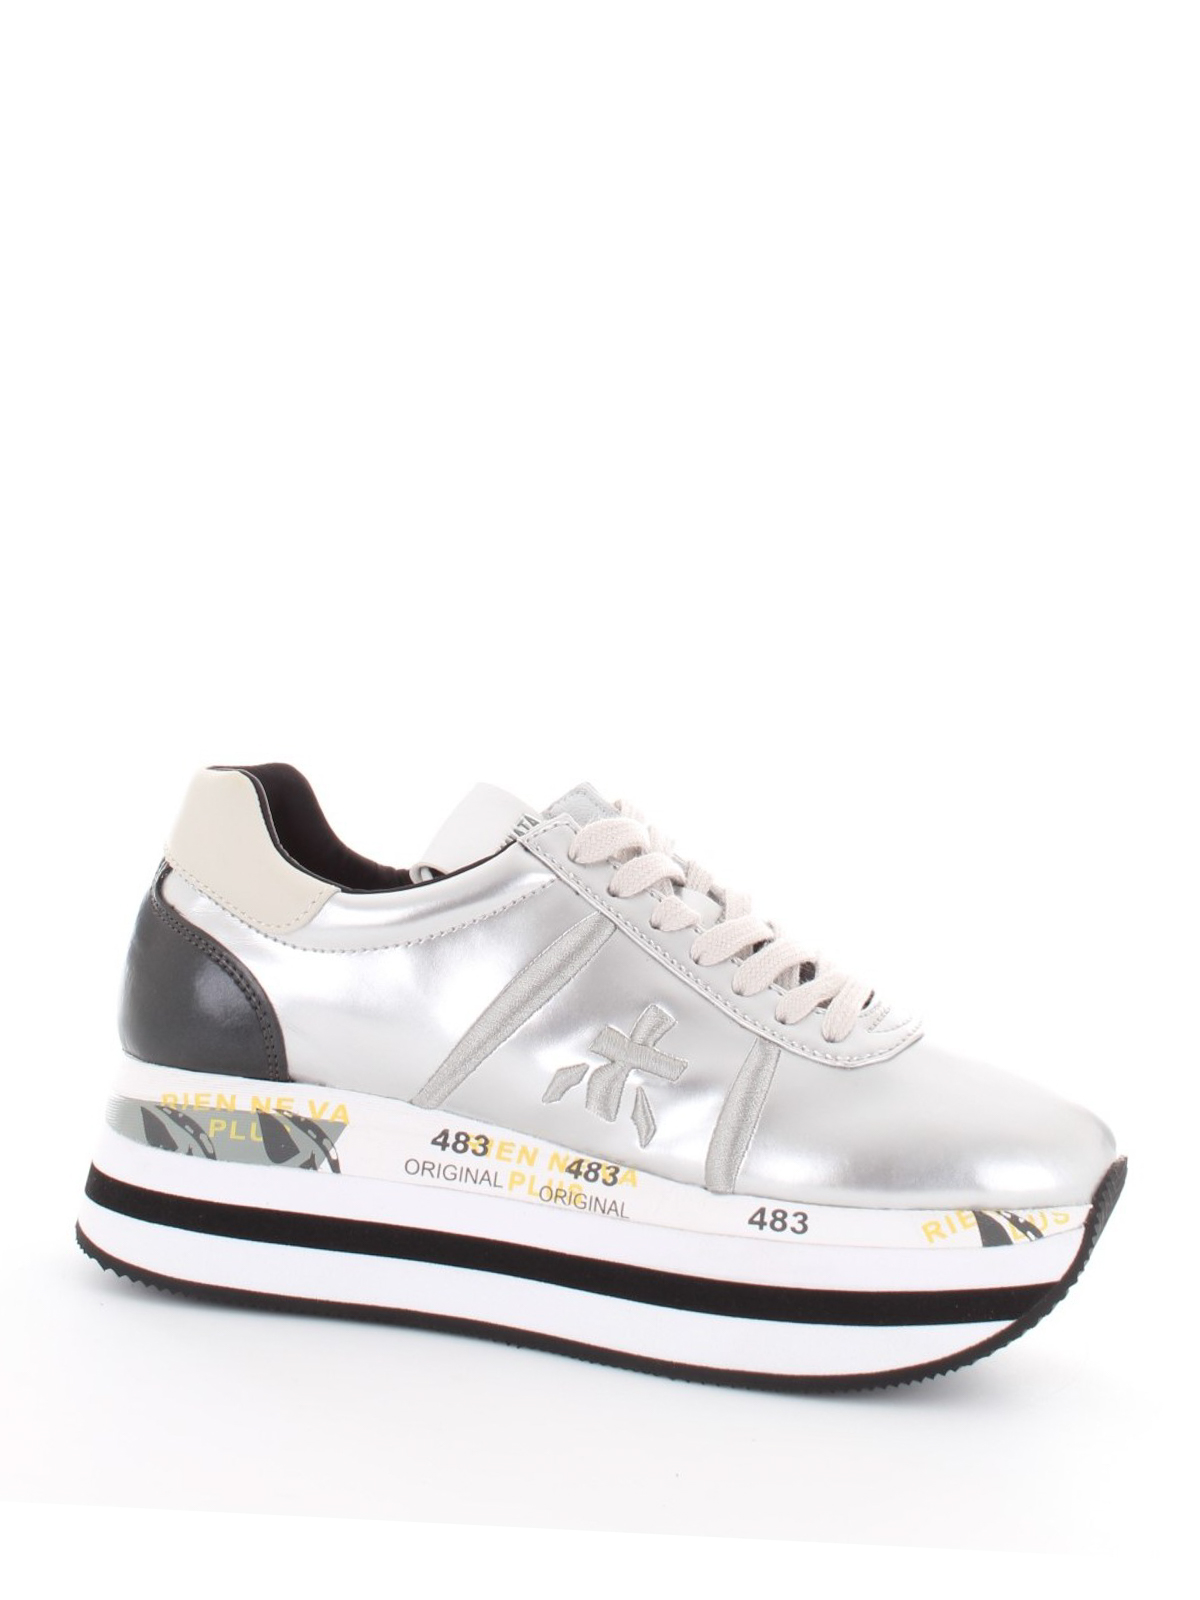 silver sneakers online